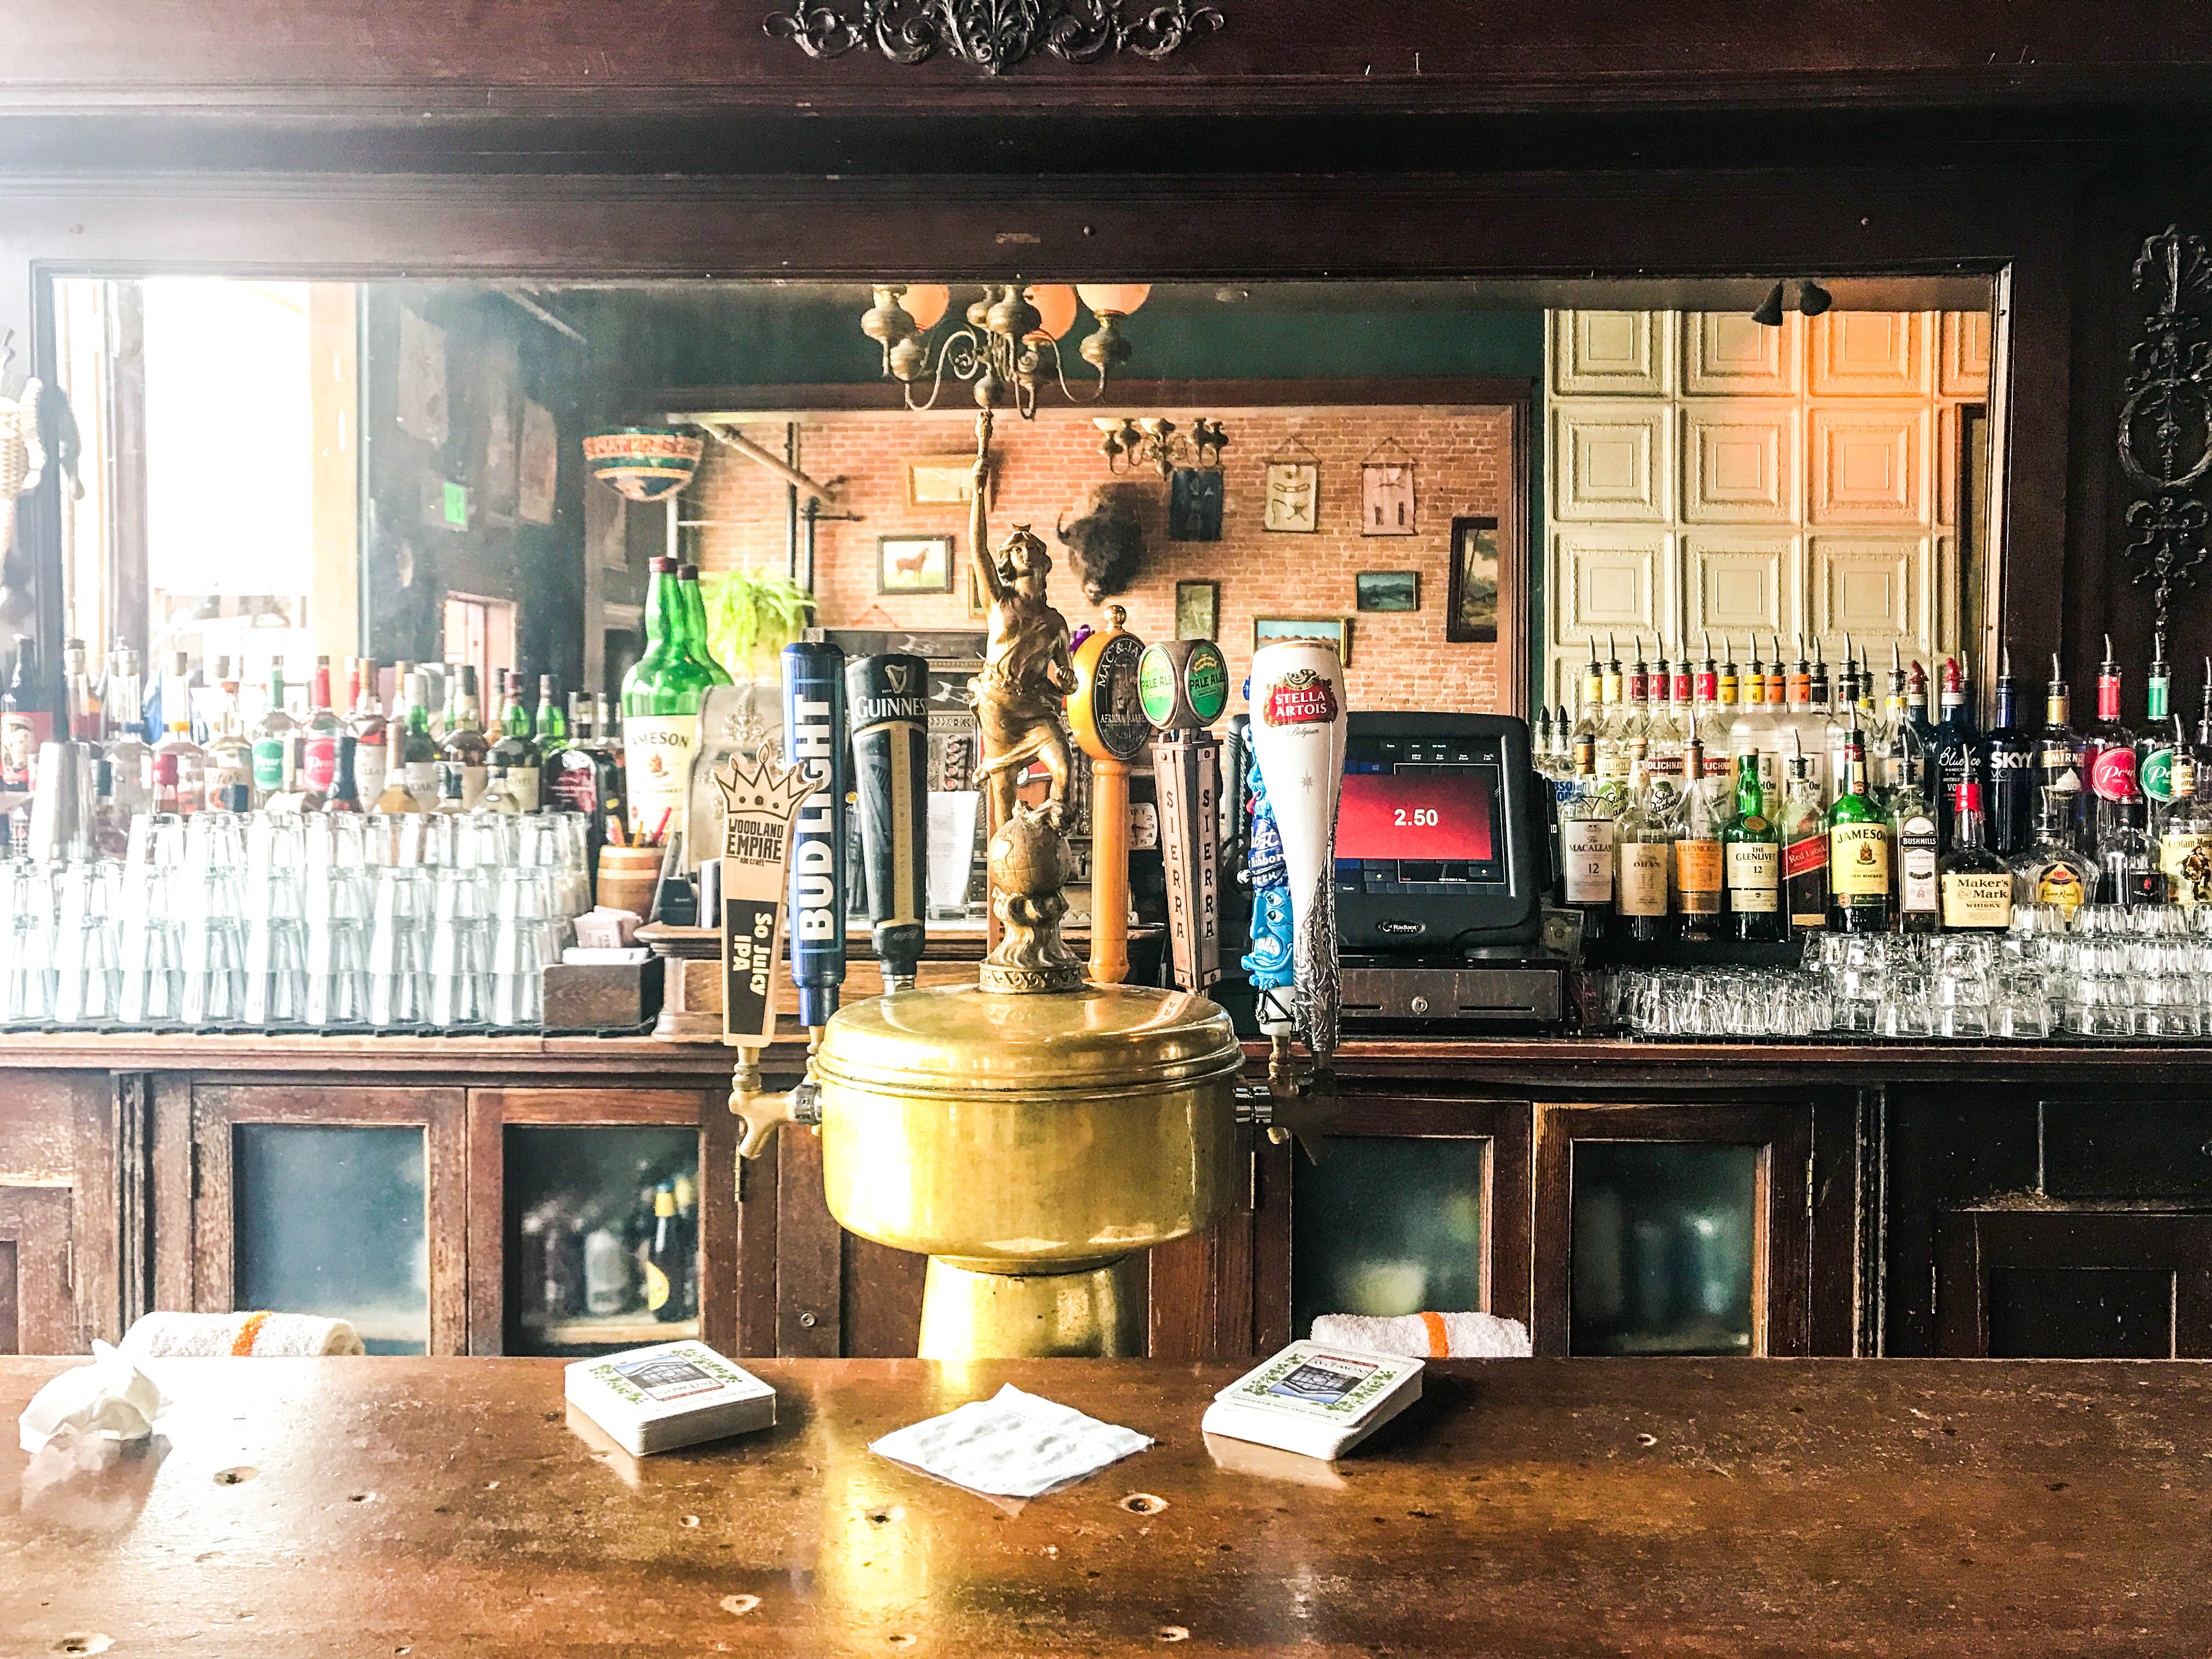 Pengilly's Saloon - The Best Bars in Boise